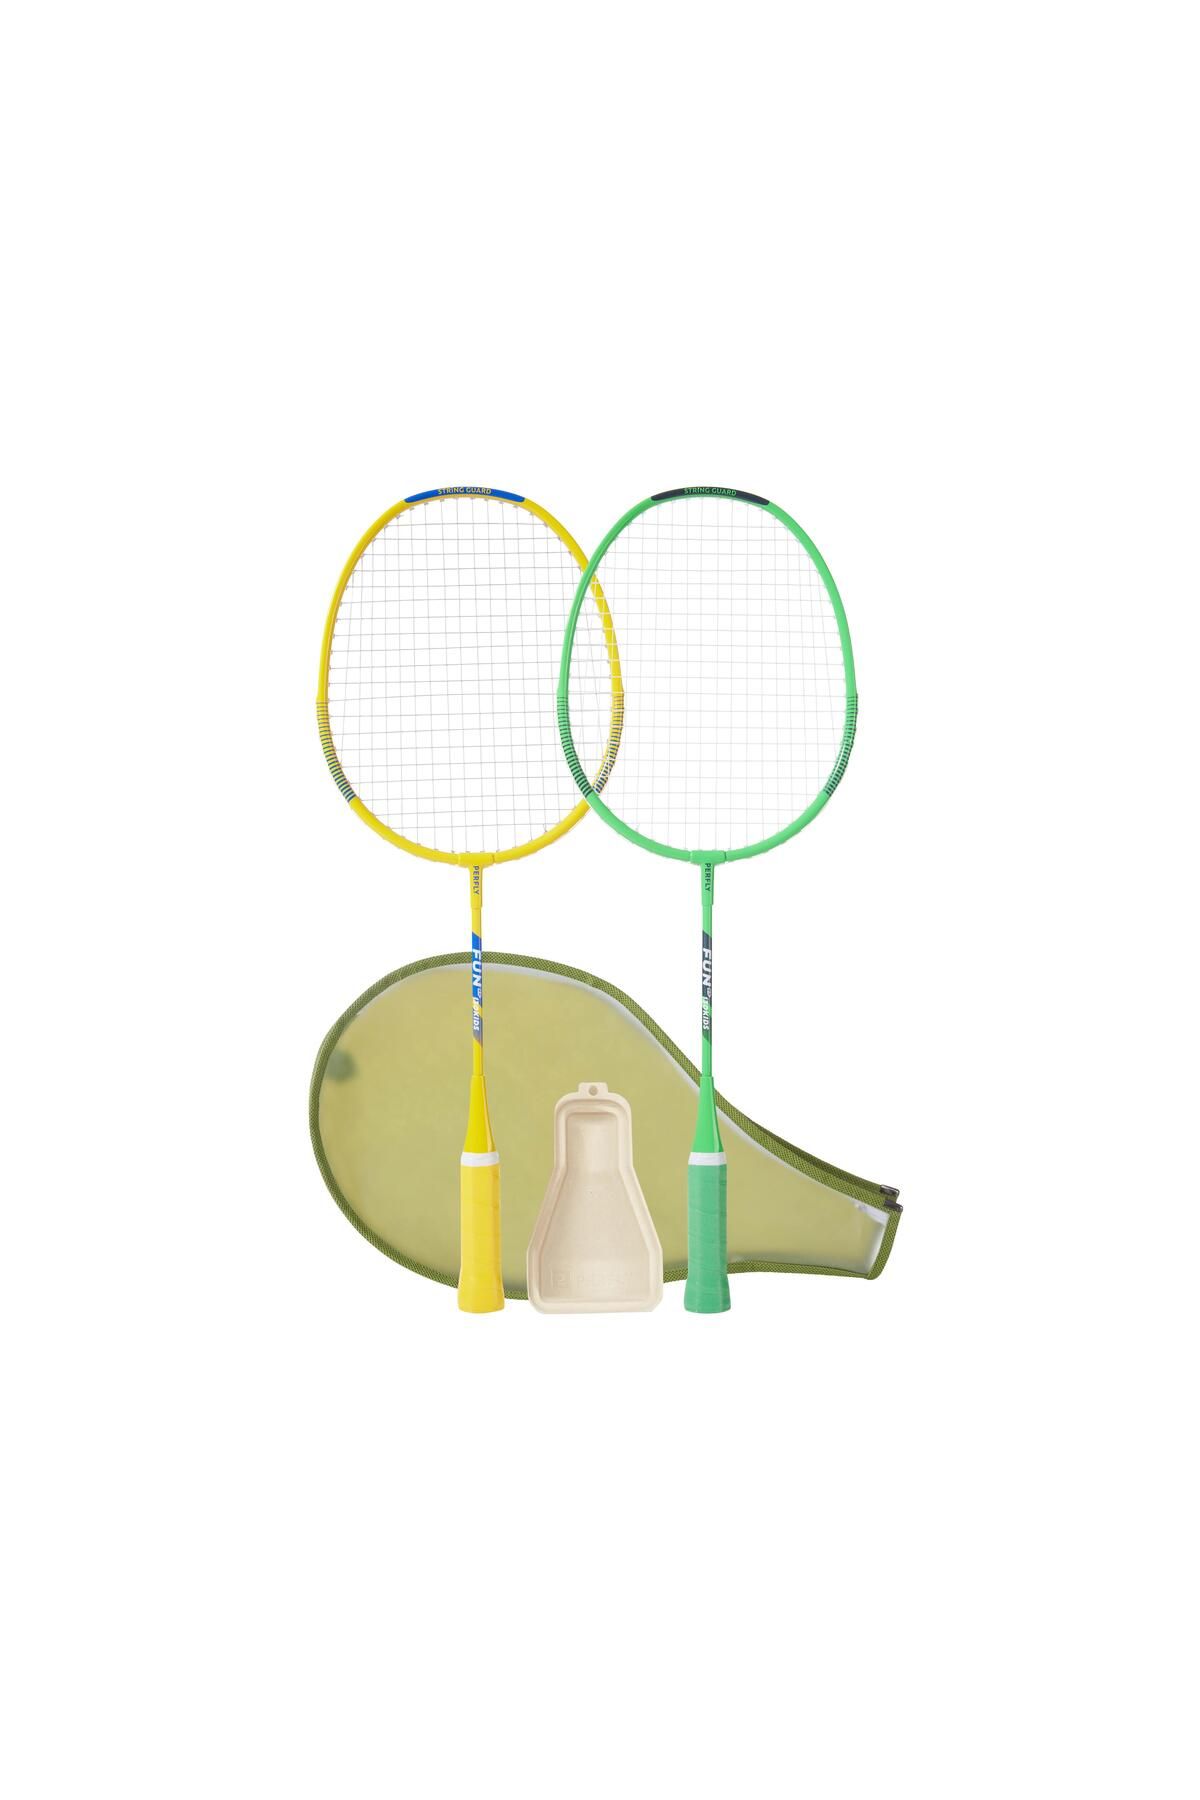 Decathlon Çocuk Badminton Raket Seti - BR 130